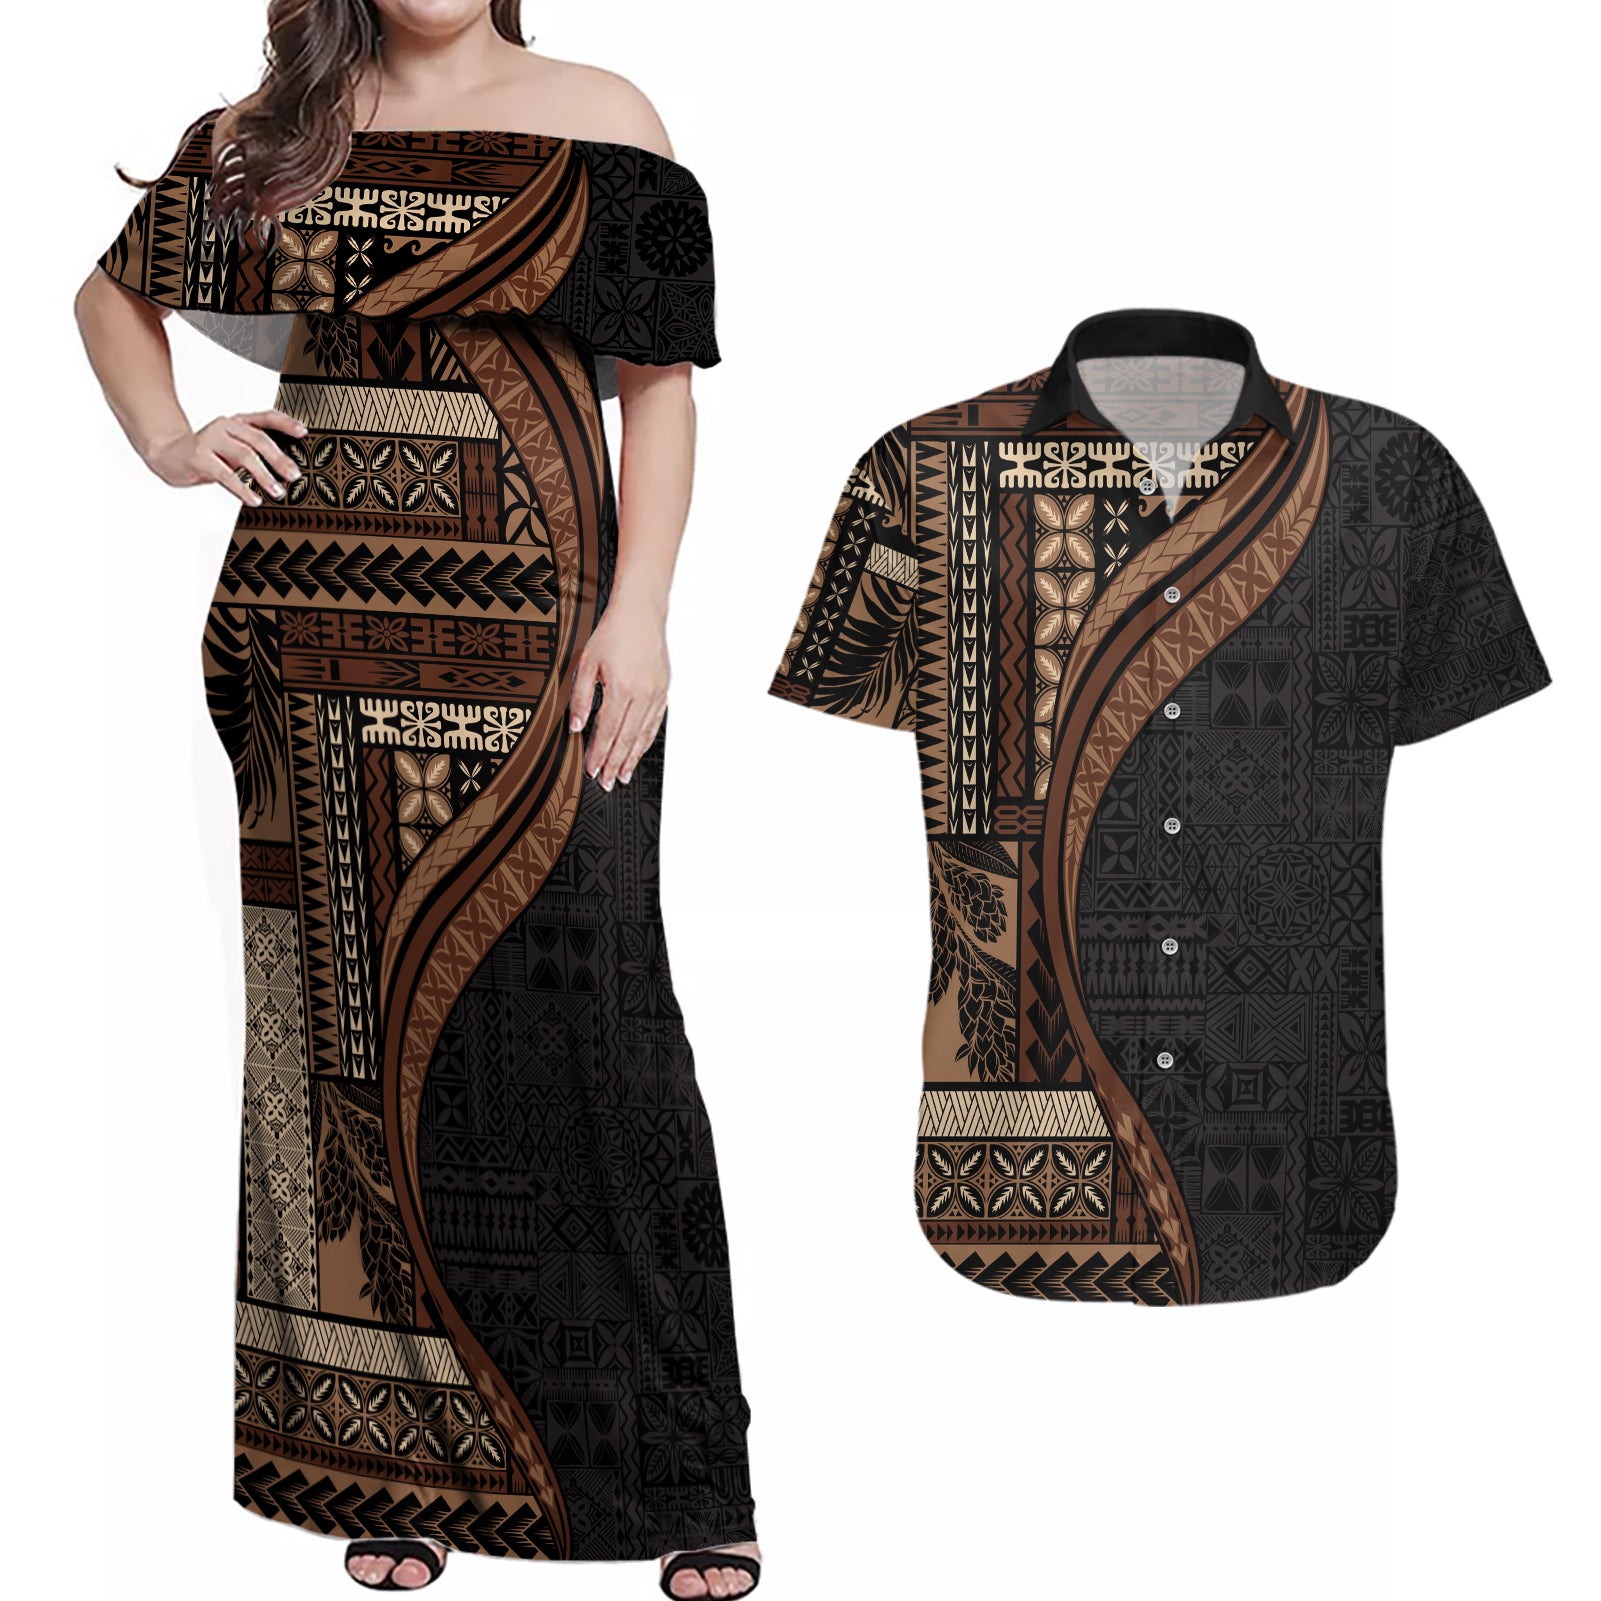 Samoa Siapo Motif and Tapa Pattern Half Style Couples Matching Off Shoulder Maxi Dress and Hawaiian Shirt Black Color